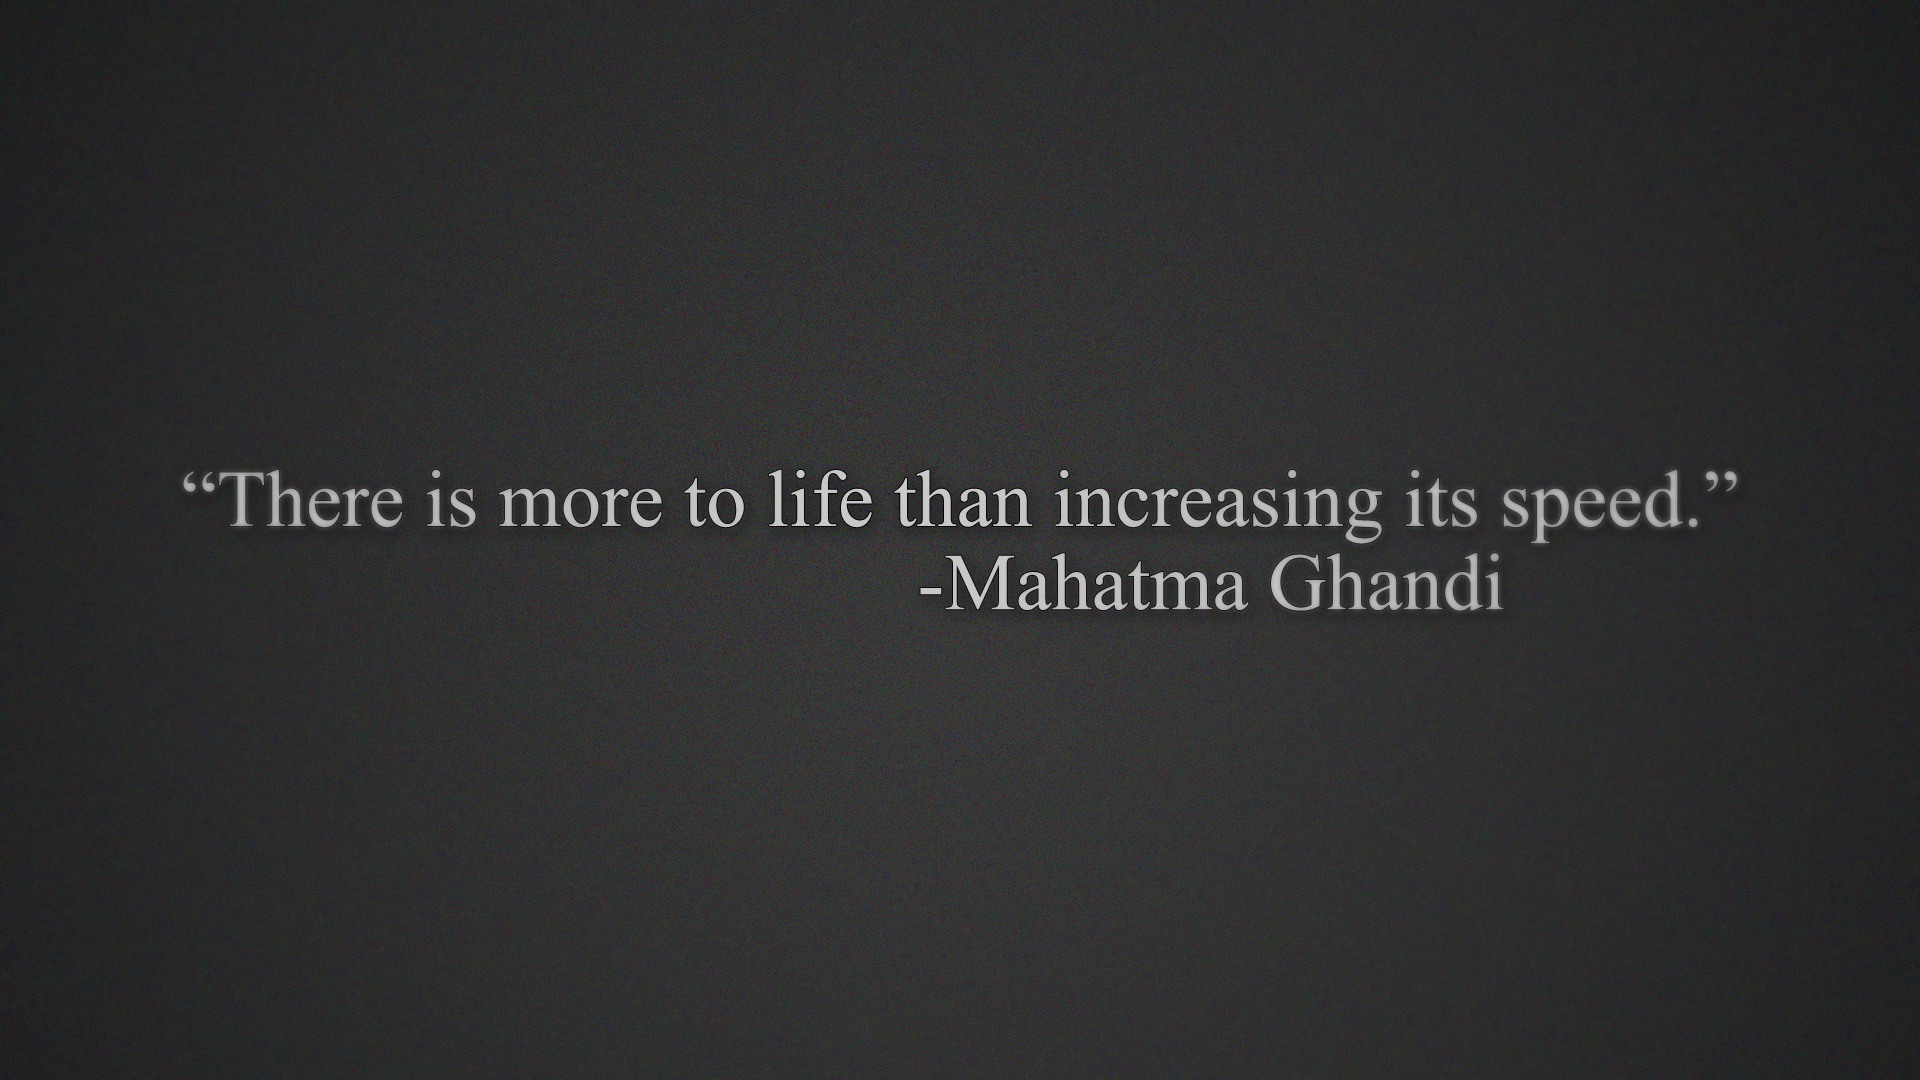 General 1920x1080 quote motivational monochrome Mahatma Gandhi simple background